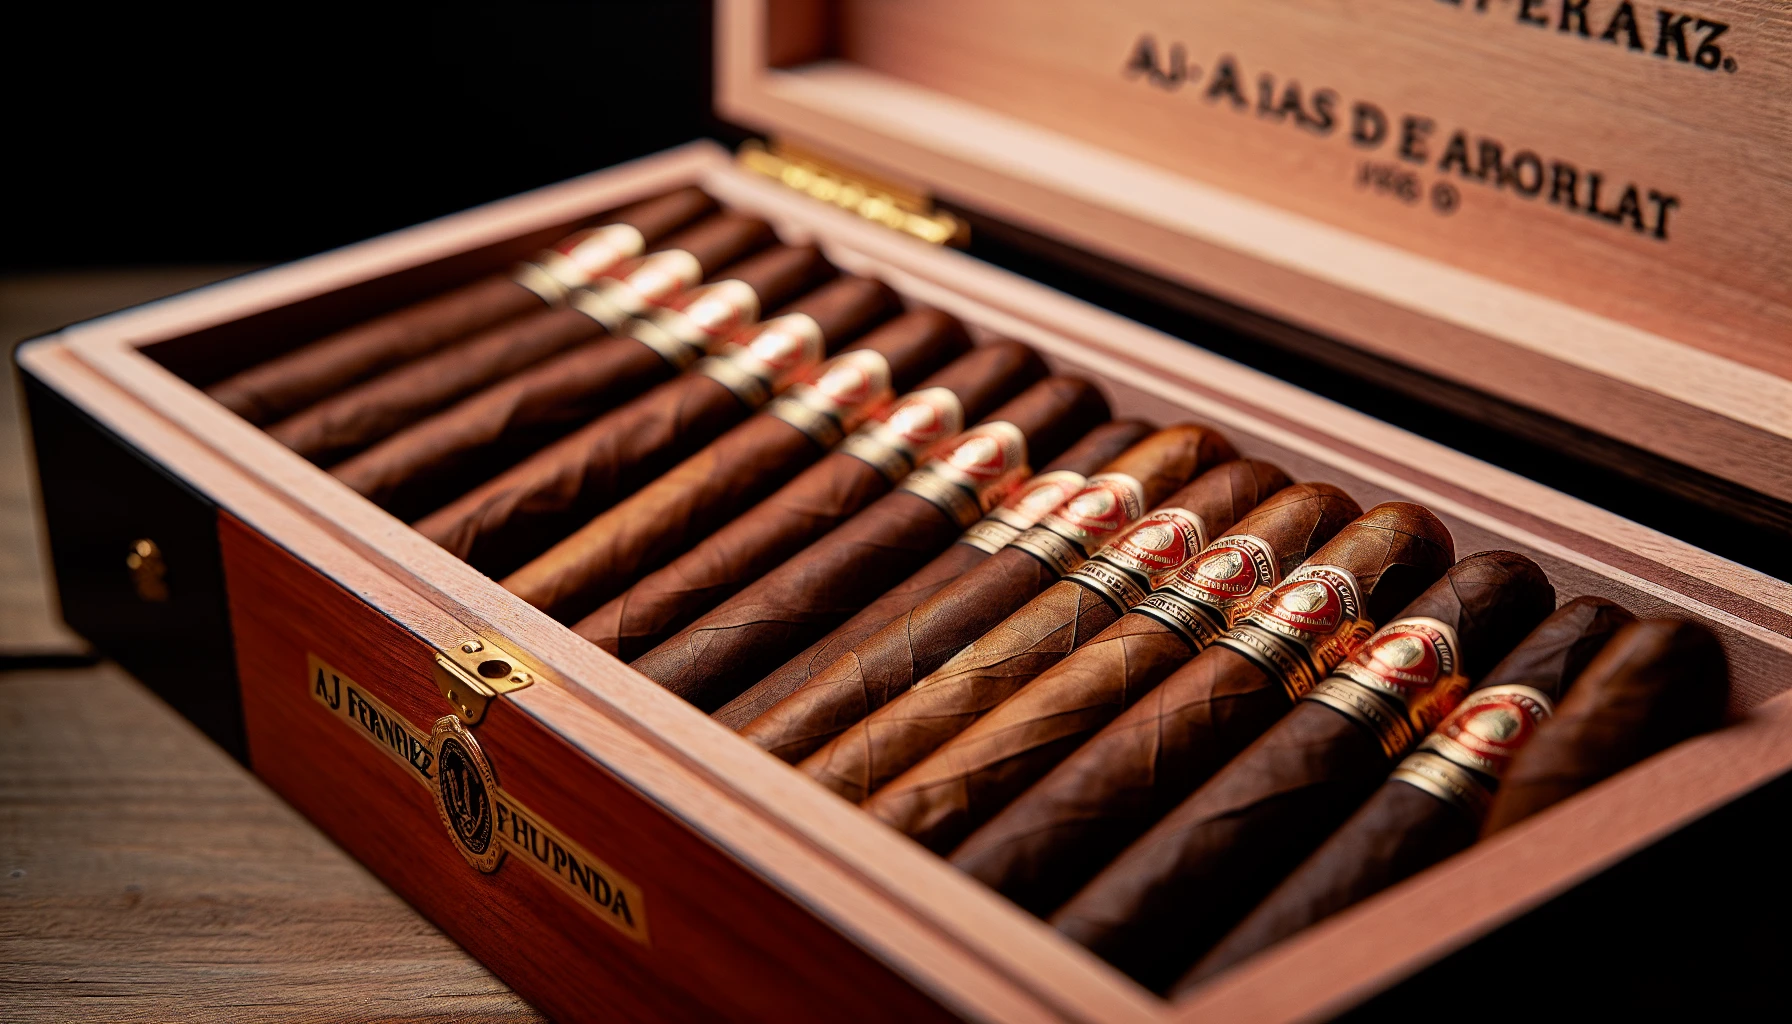 A selection of AJ Fernandez Días de Gloria cigars resting in a wooden humidor